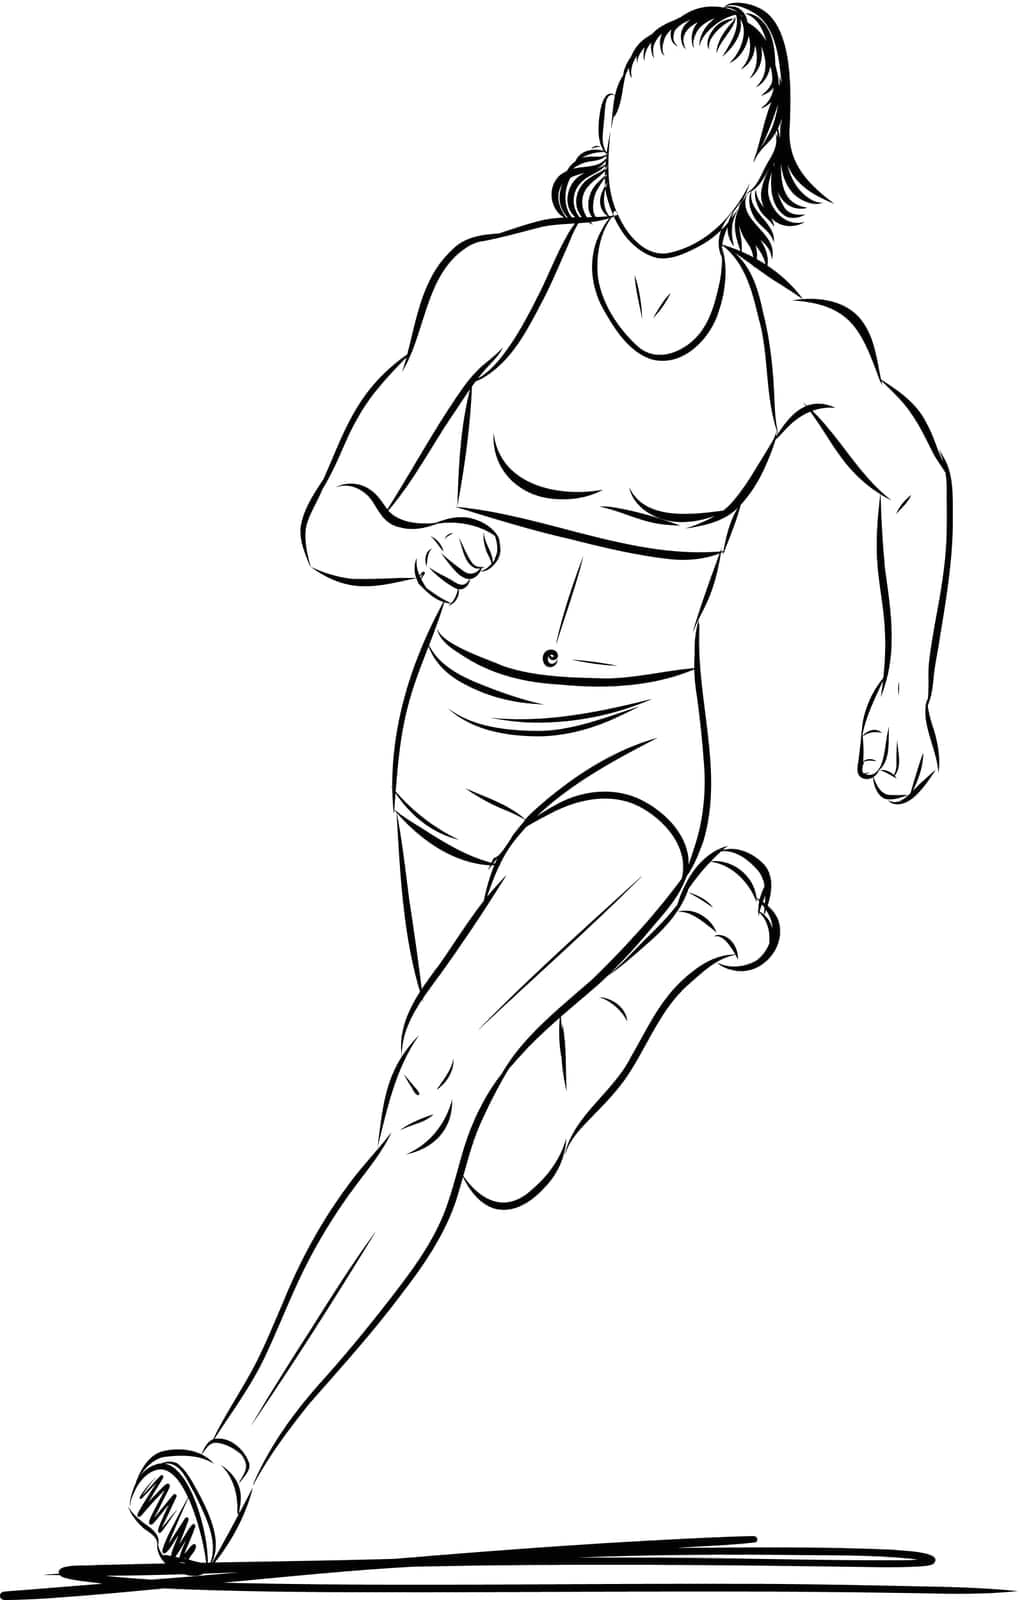 Sketch of young woman runner running, Marathon runners vector illustration